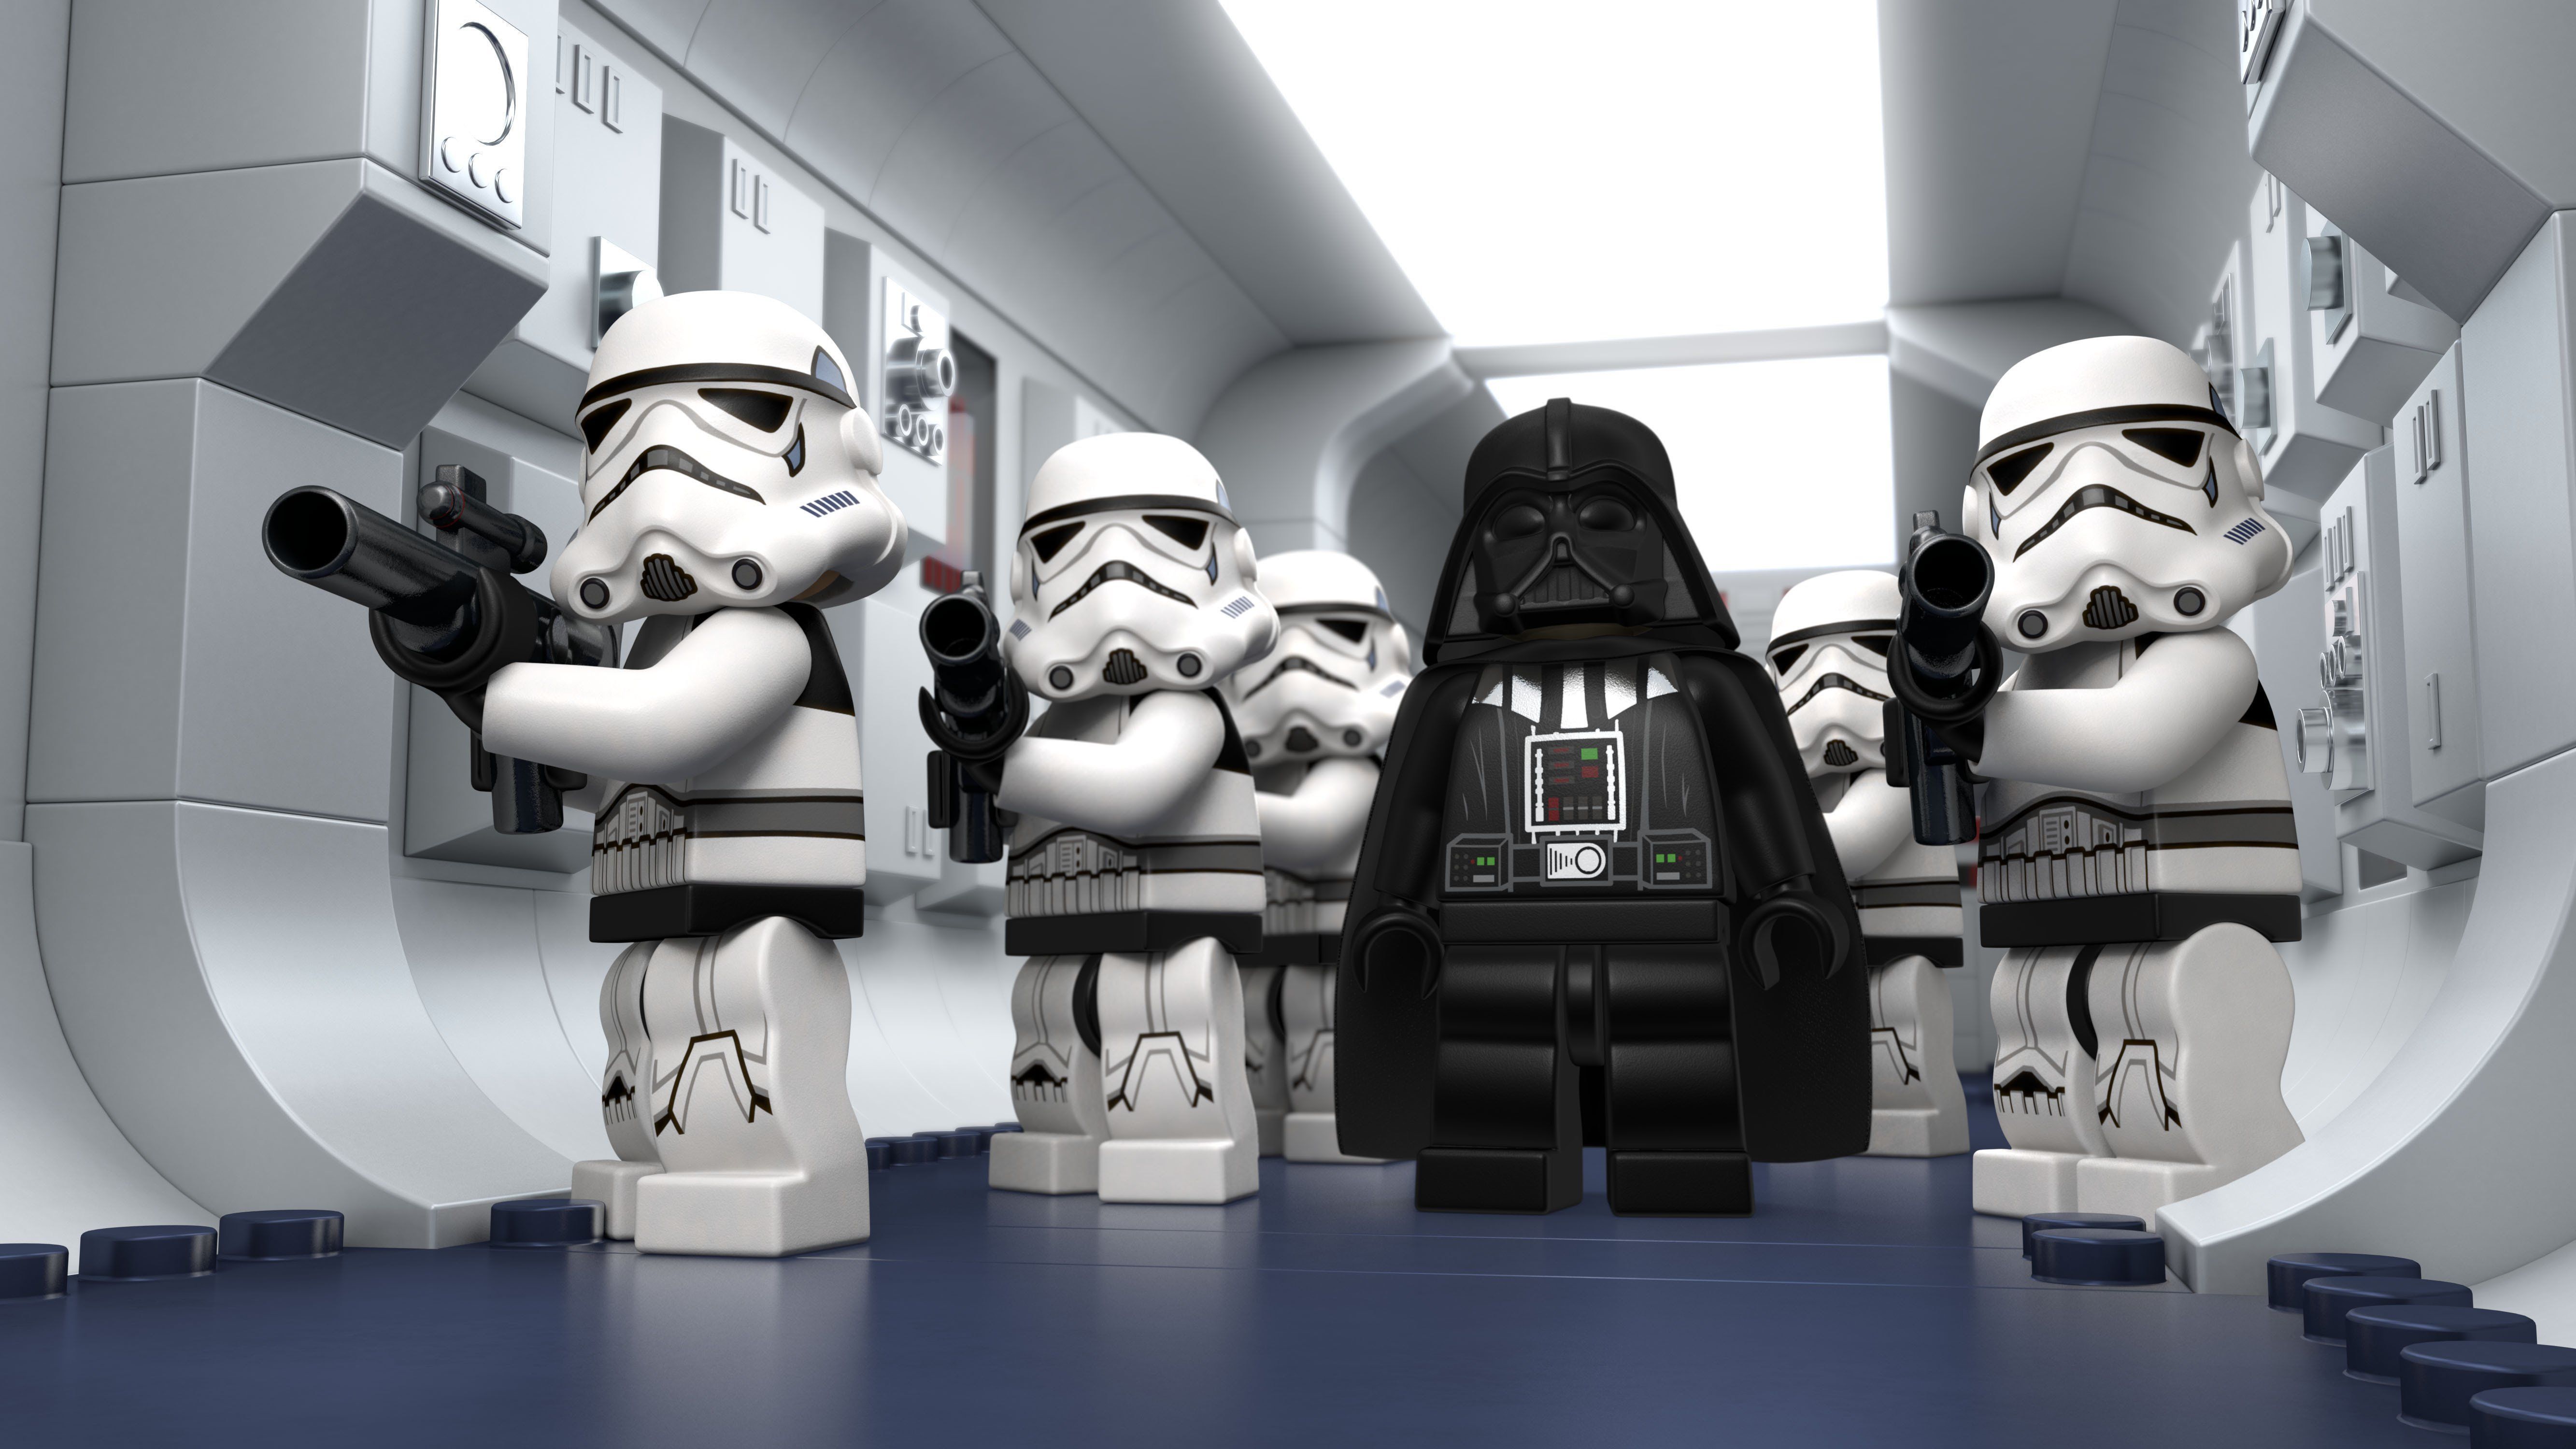 Awesome LEGO Star Wars Wallpaper Wars Stormtroopers of Star Wars Storm. Star wars wallpaper, Star wars droids, Darth vader artwork